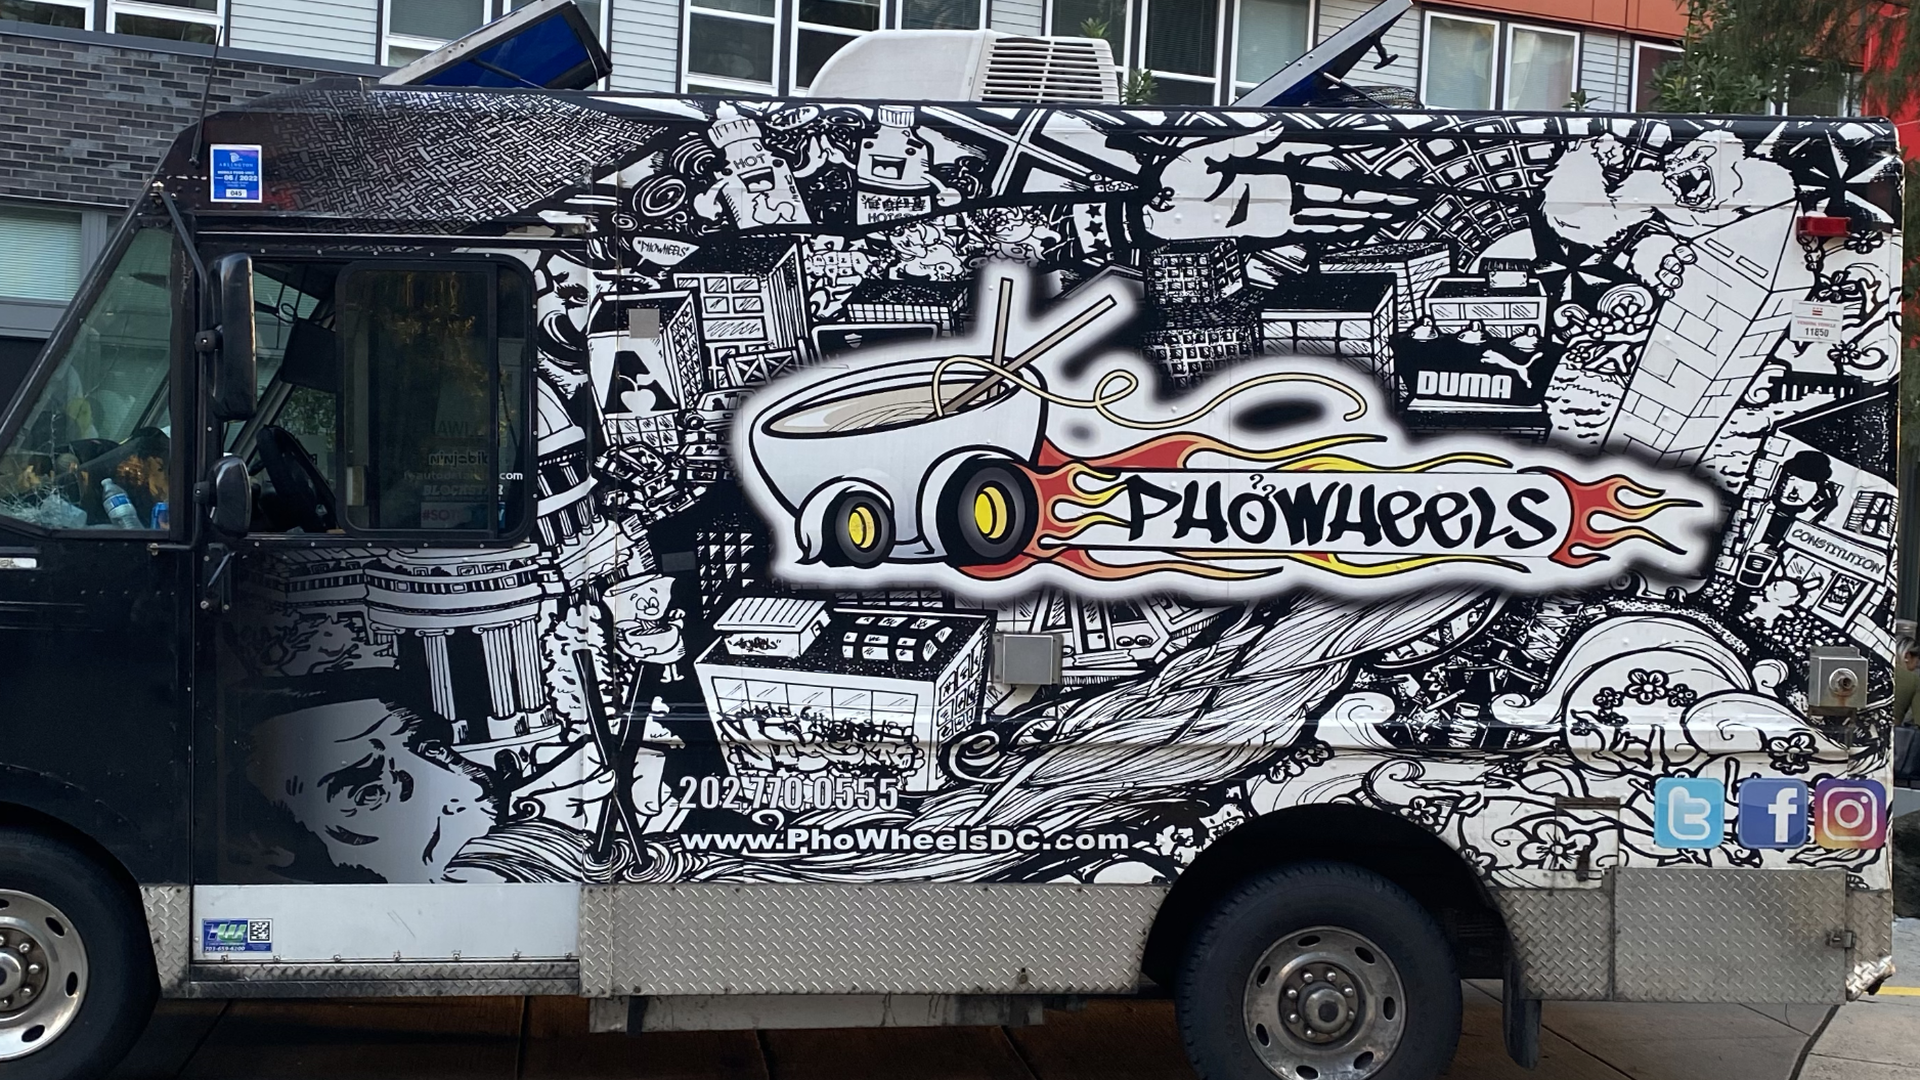 PhoWheels food truck.